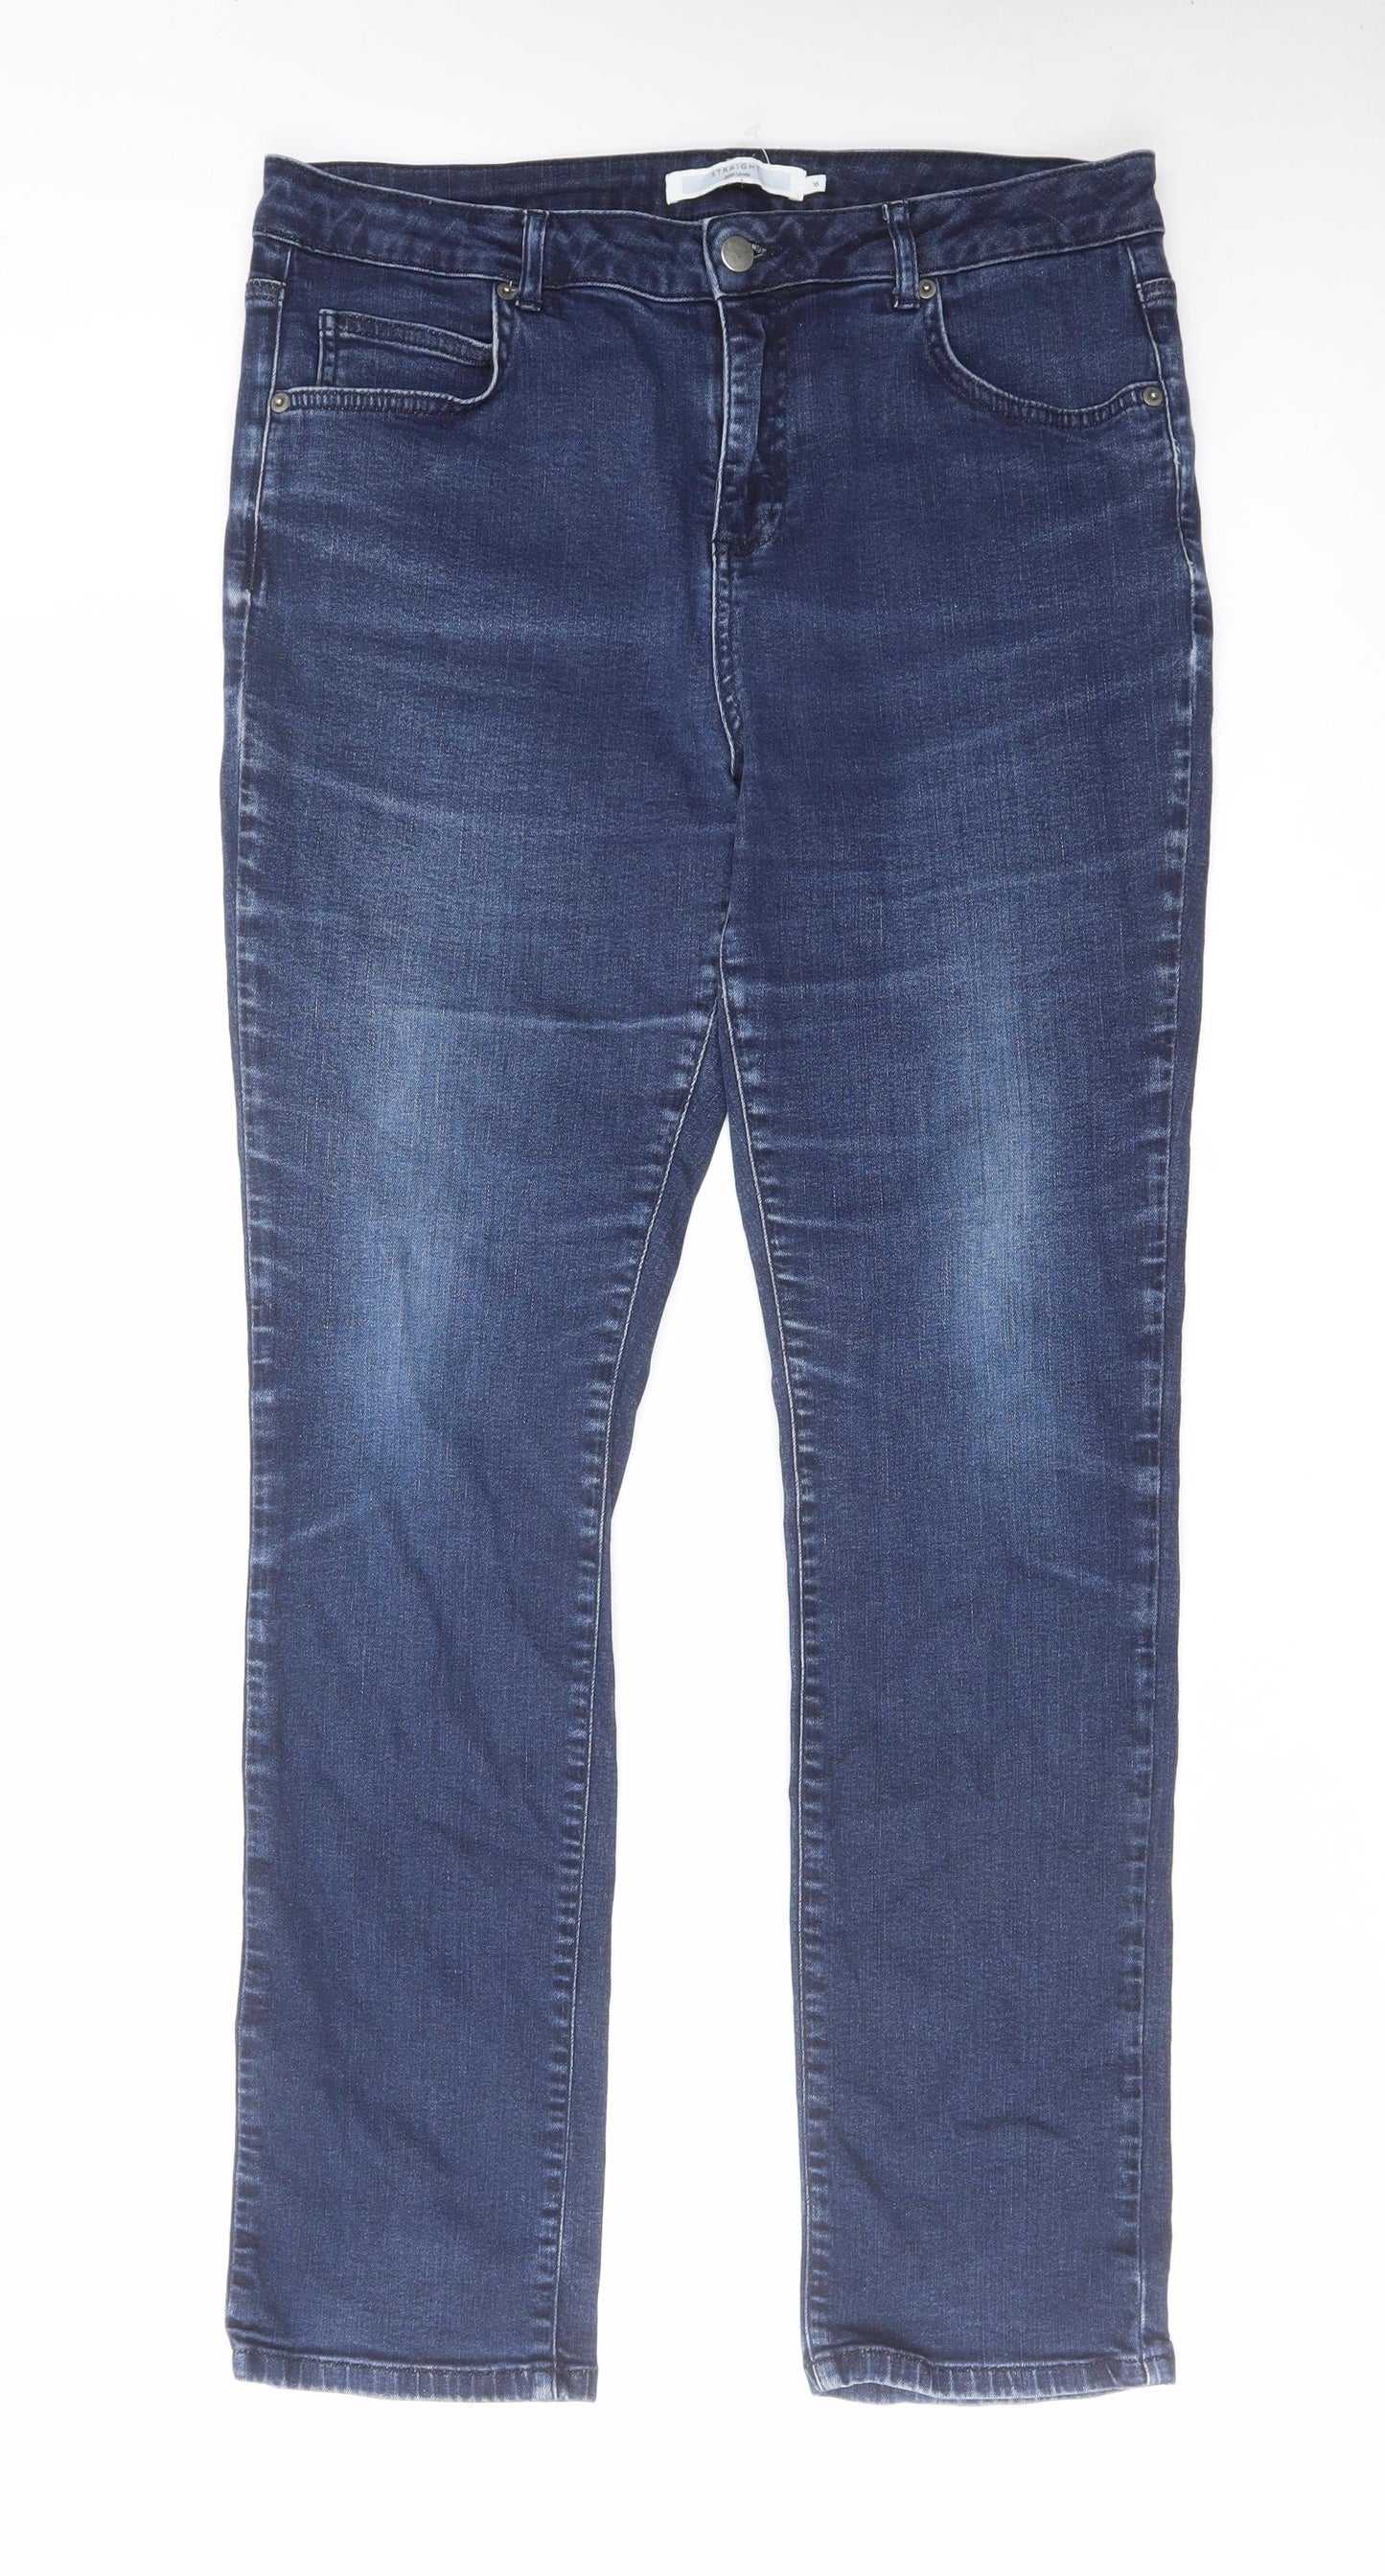 John Lewis Womens Blue Cotton Skinny Jeans Size 16 L30 in Regular Zip